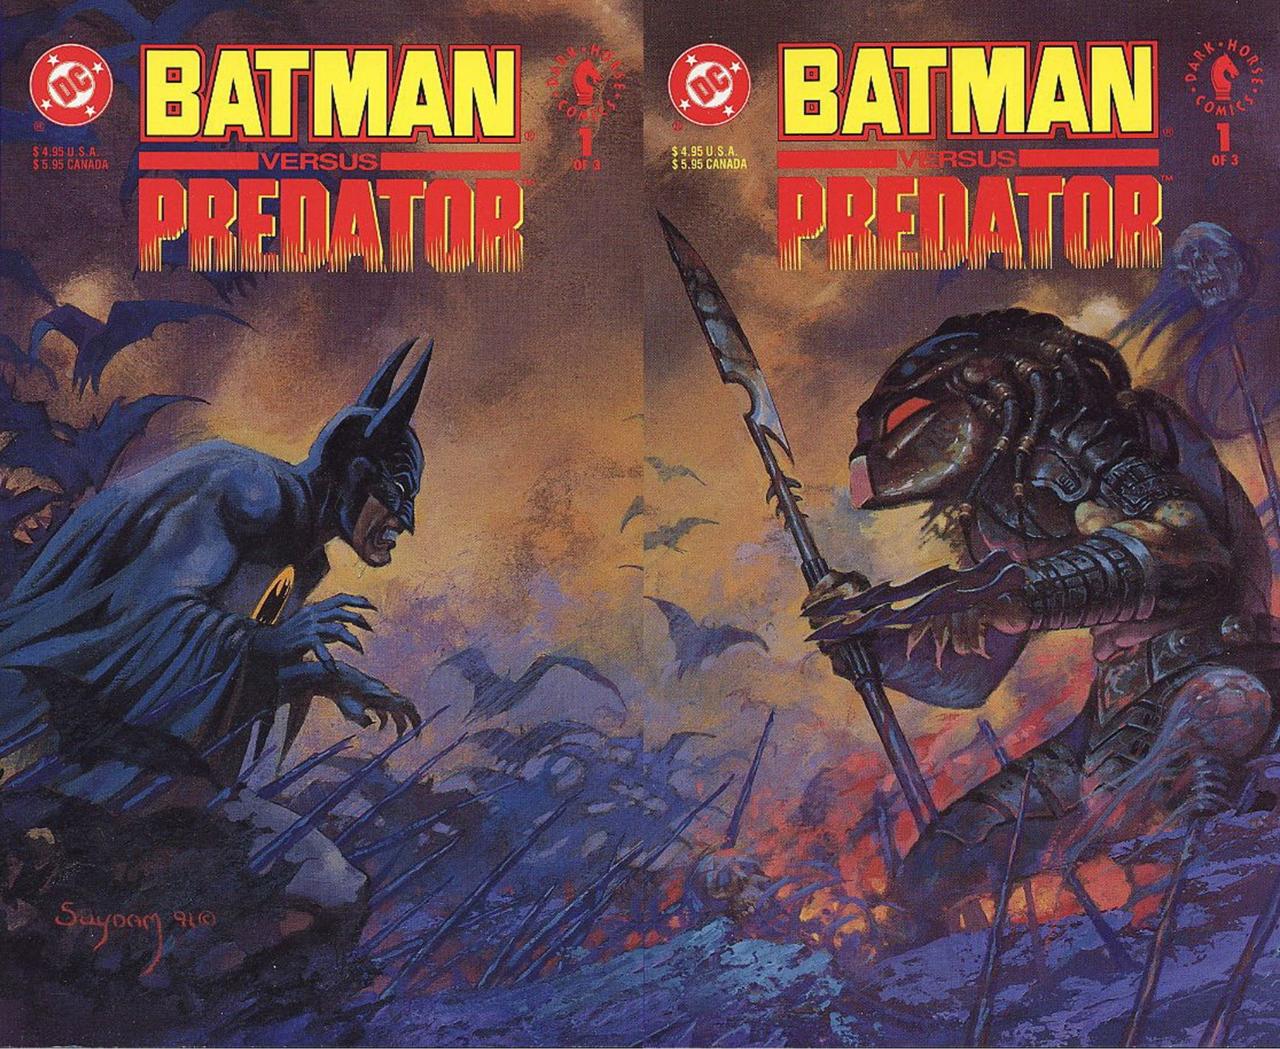 5. Batman fights Predator